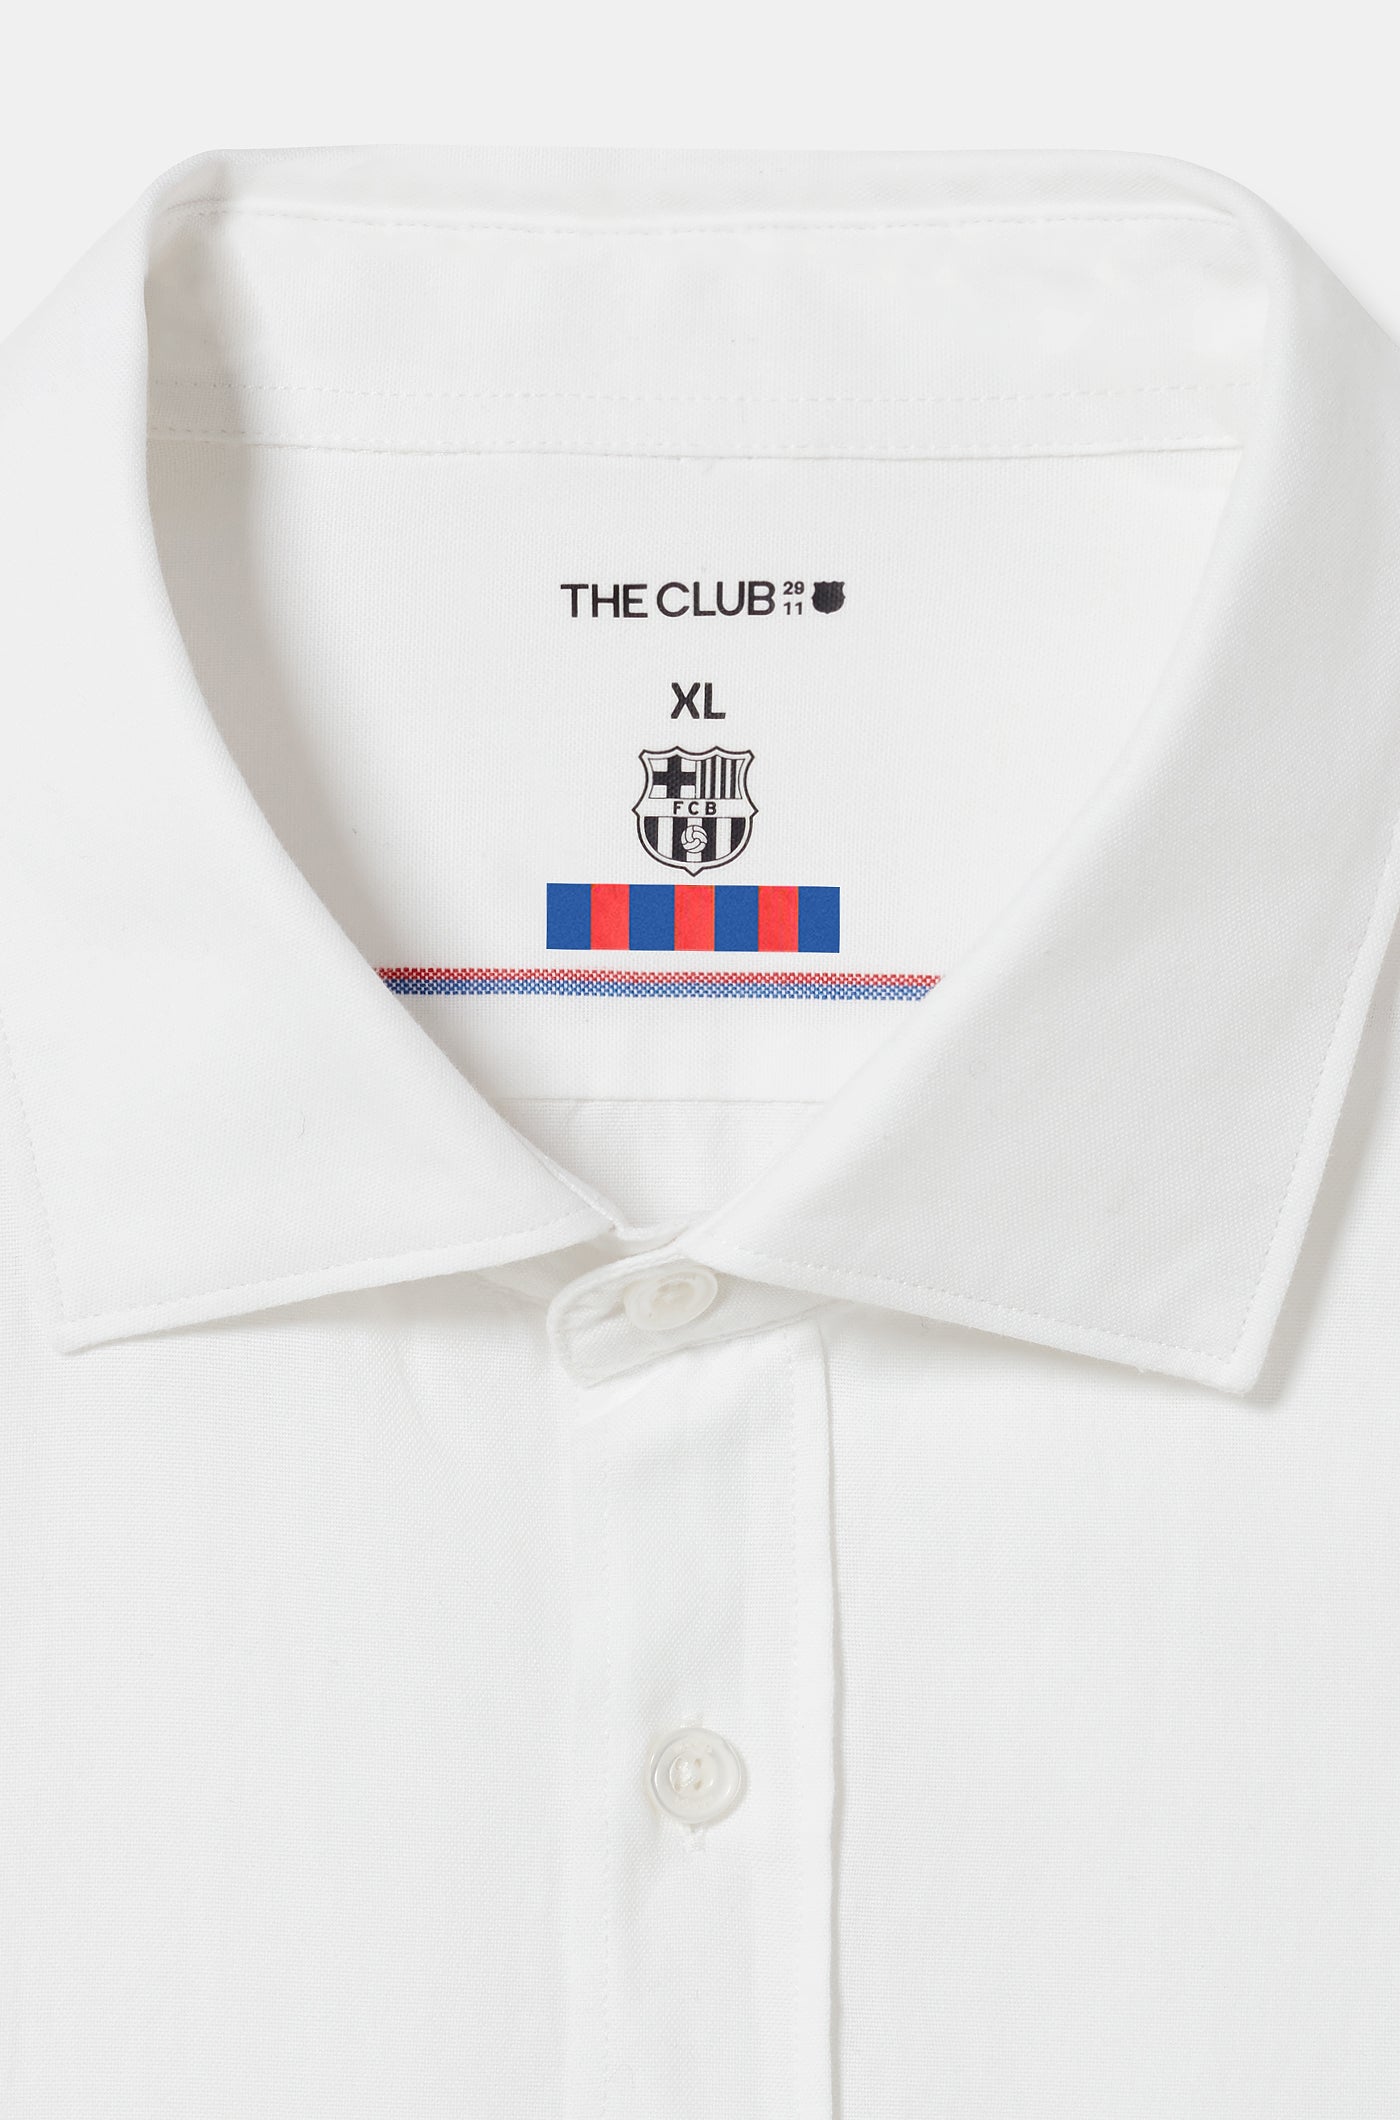 The Club White Shirt